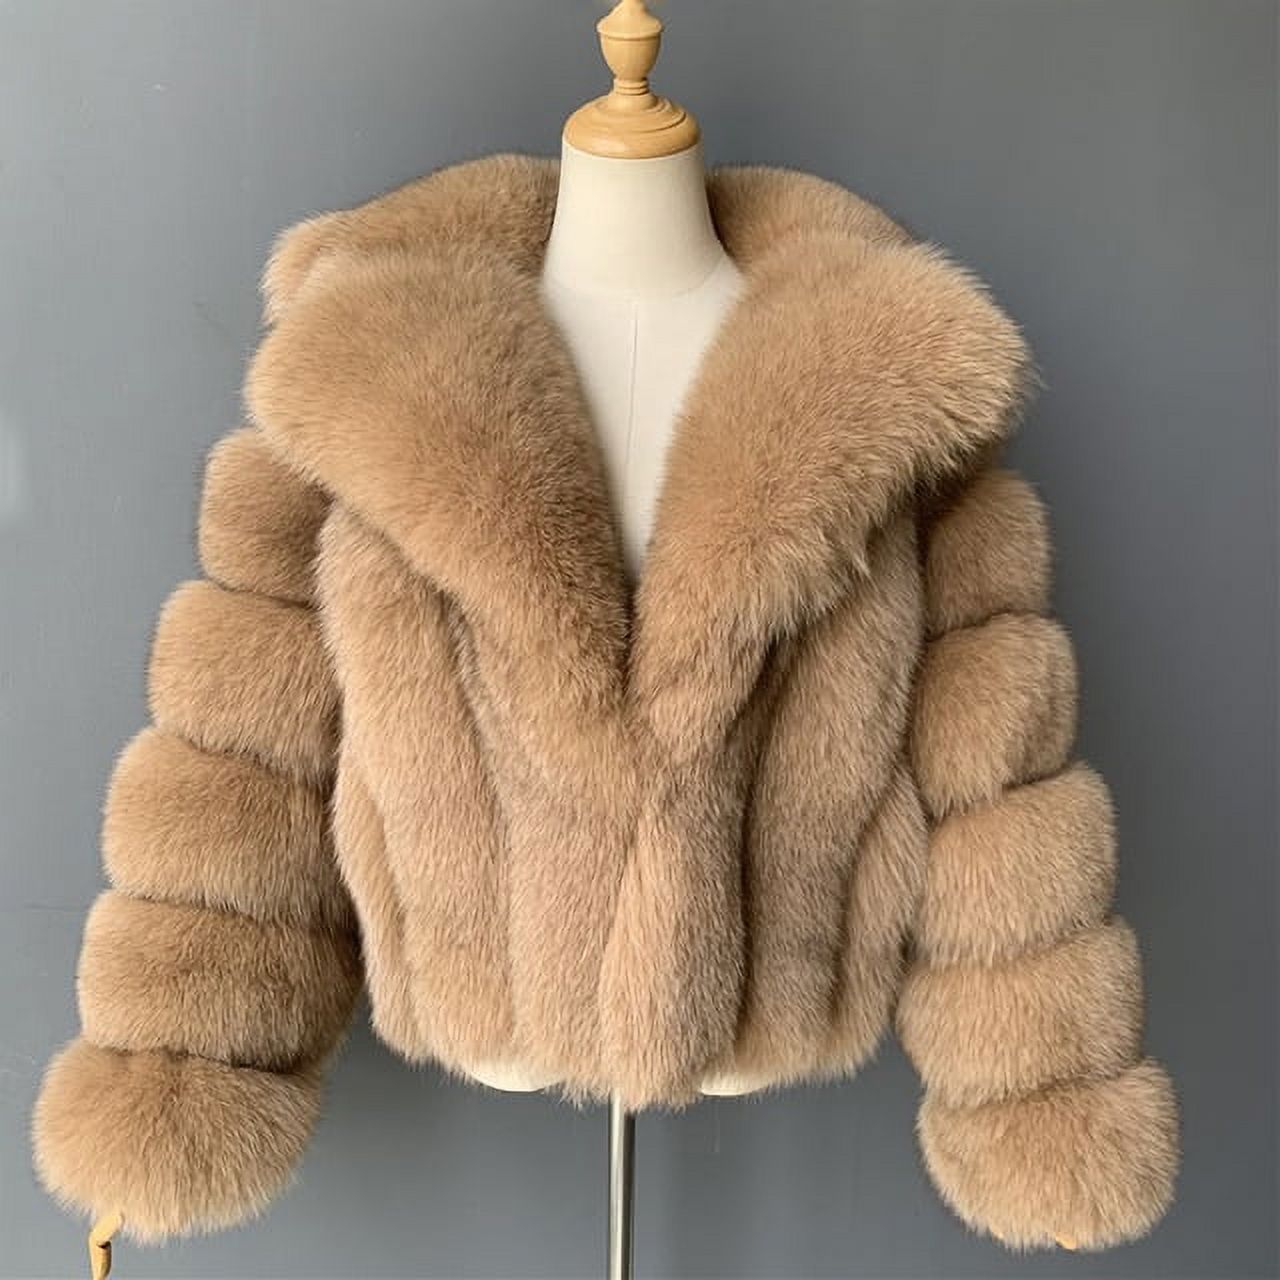 PIKADINGNIS Winter Thicken Mink Coats Women Fashion Turndown Collar Short Faux Fur Coat Elegant Warm Plush Outerwear Womens Jacket - image 1 of 6